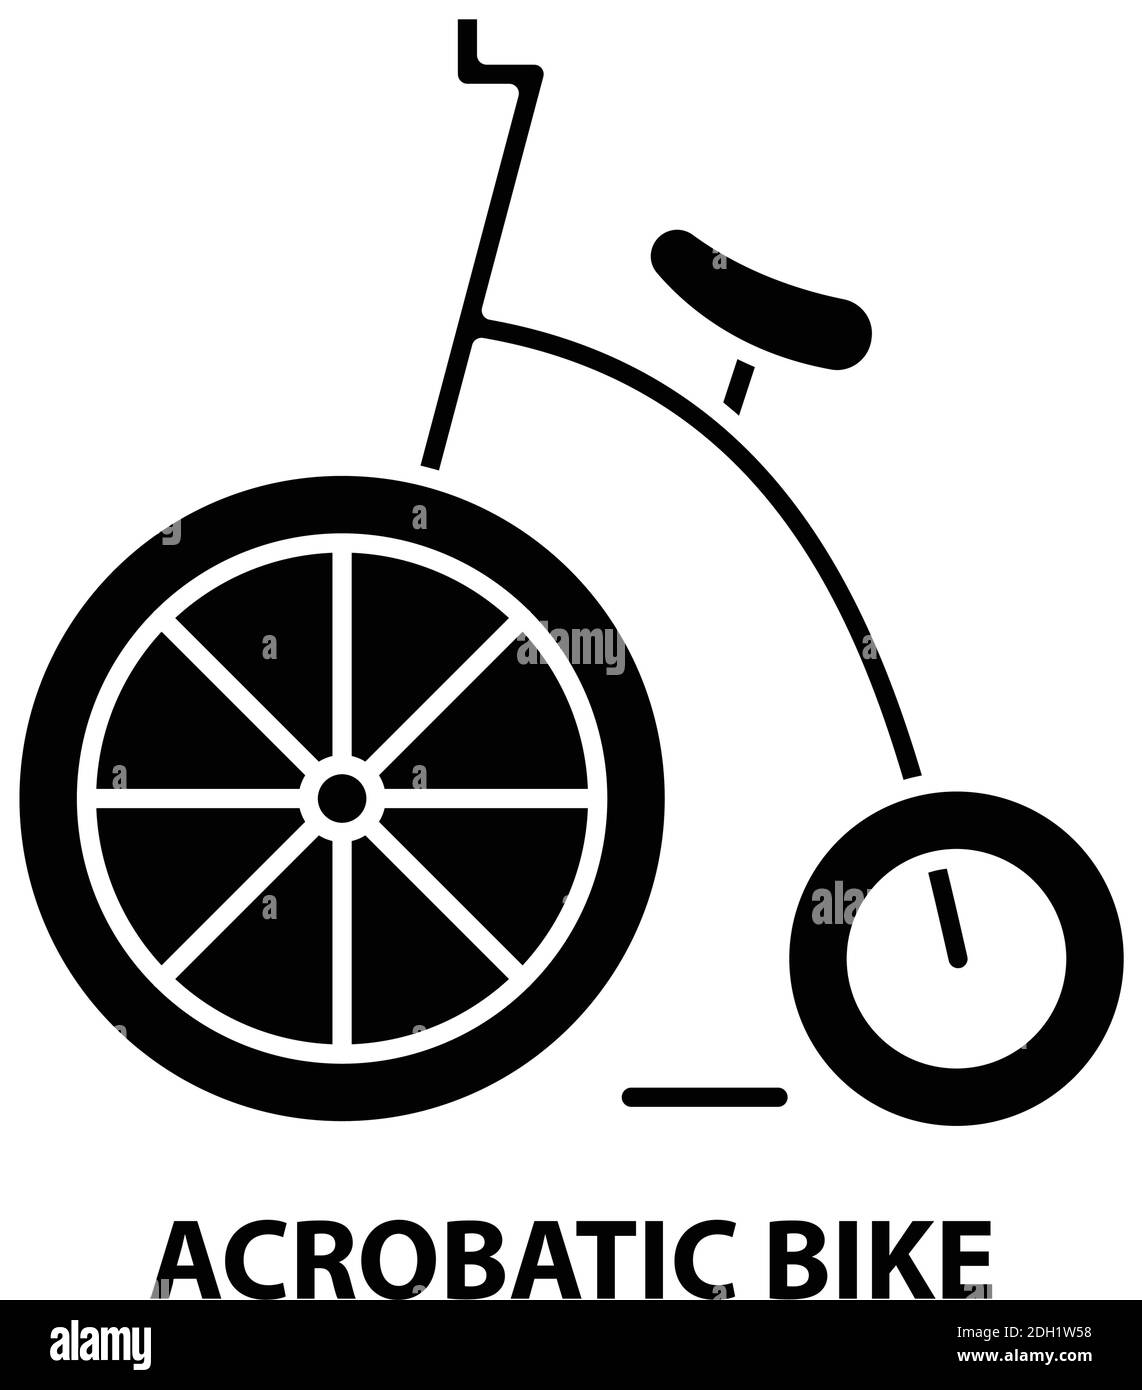 acrobatic bike icon, black vector sign with editable strokes, concept illustration Stock Vector